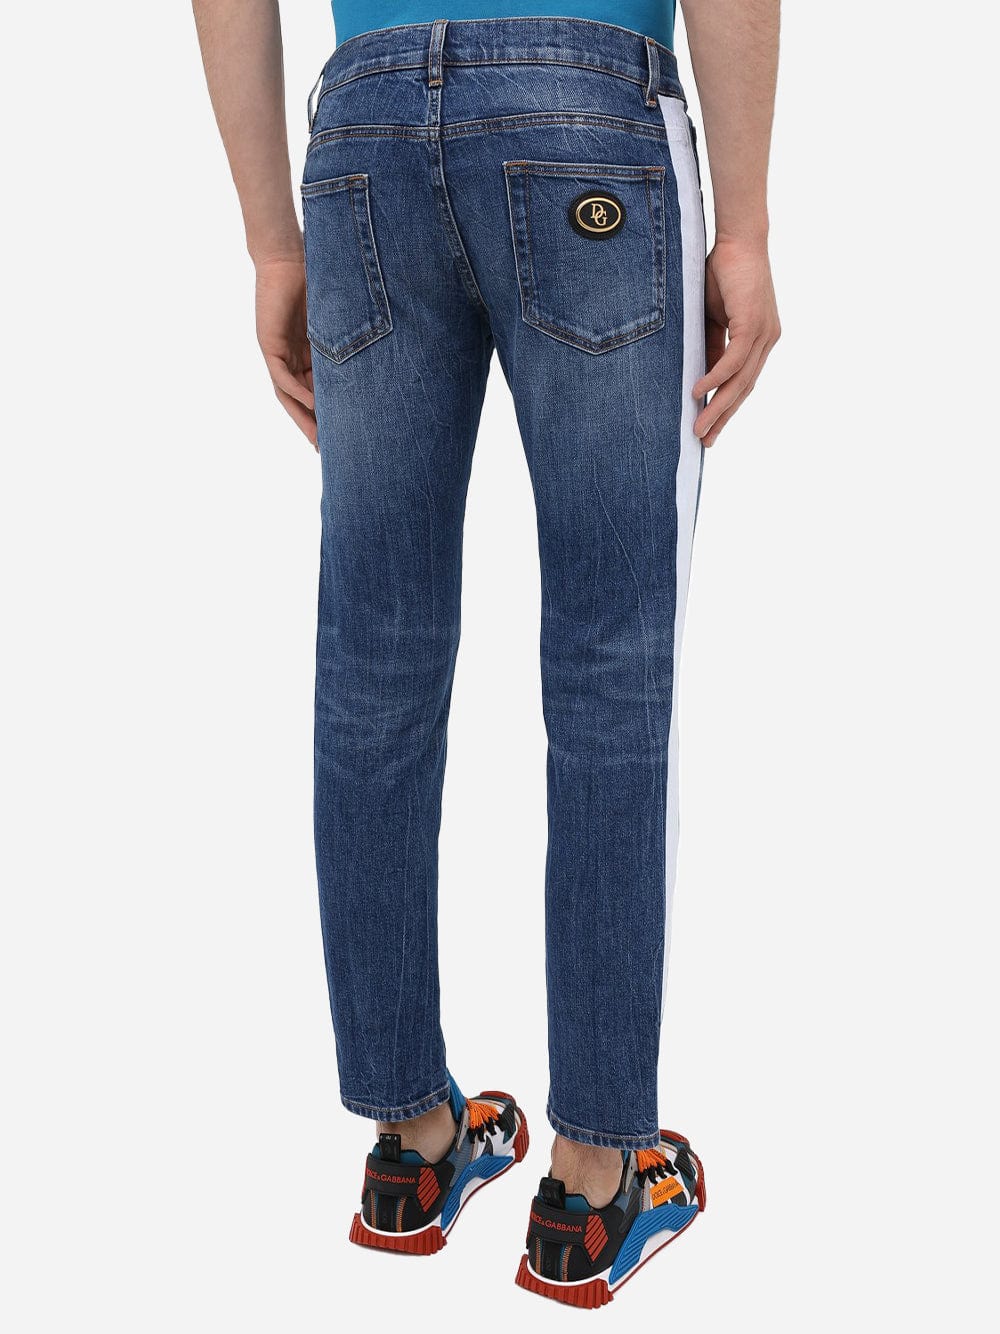 Dolce & Gabbana Striped Skinny Jeans